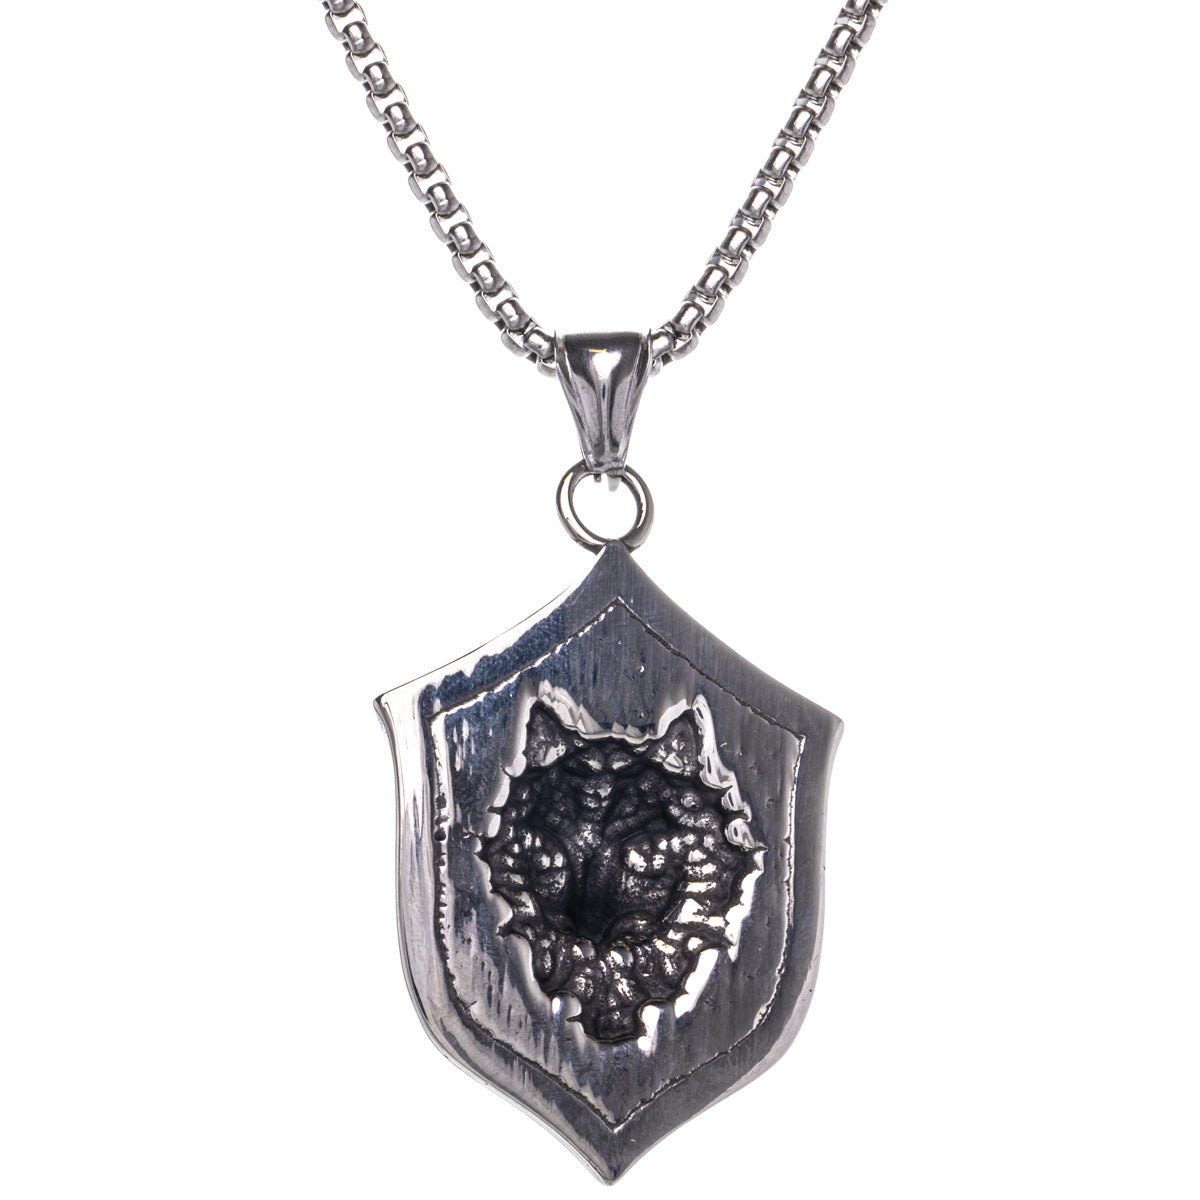 Fenrirsudenkopf shield pendant necklace (Steel 316L)